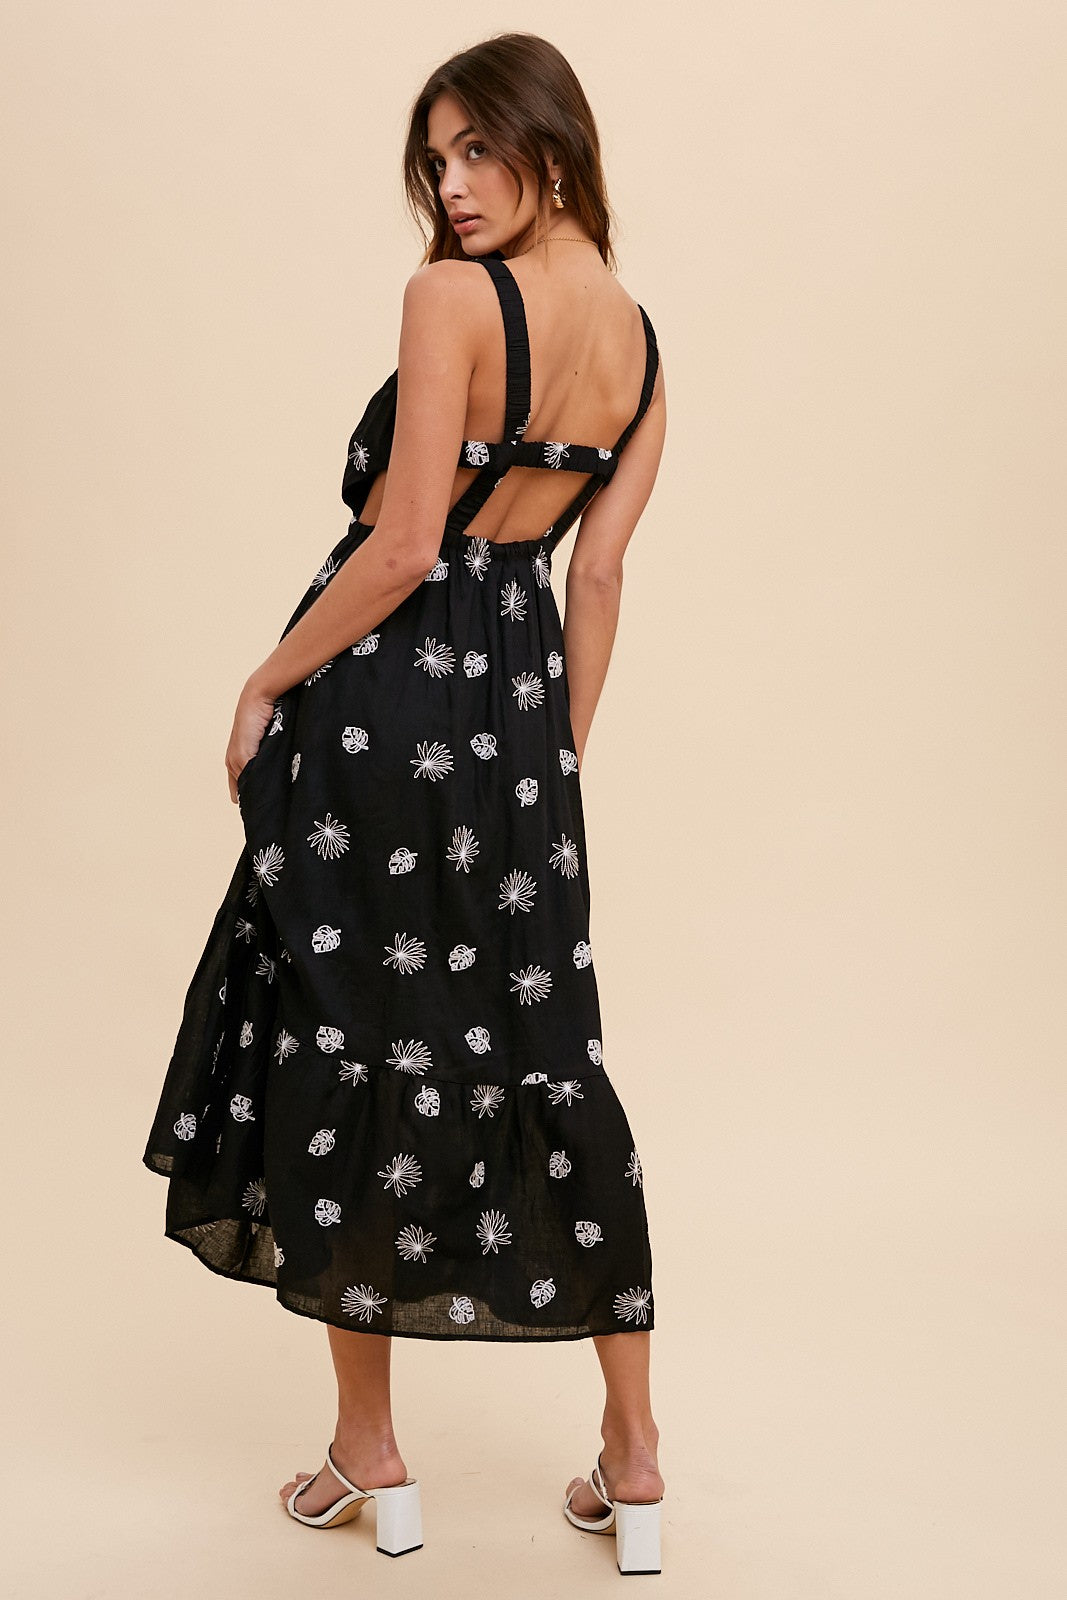 Malibu B/W Embroidered Dress